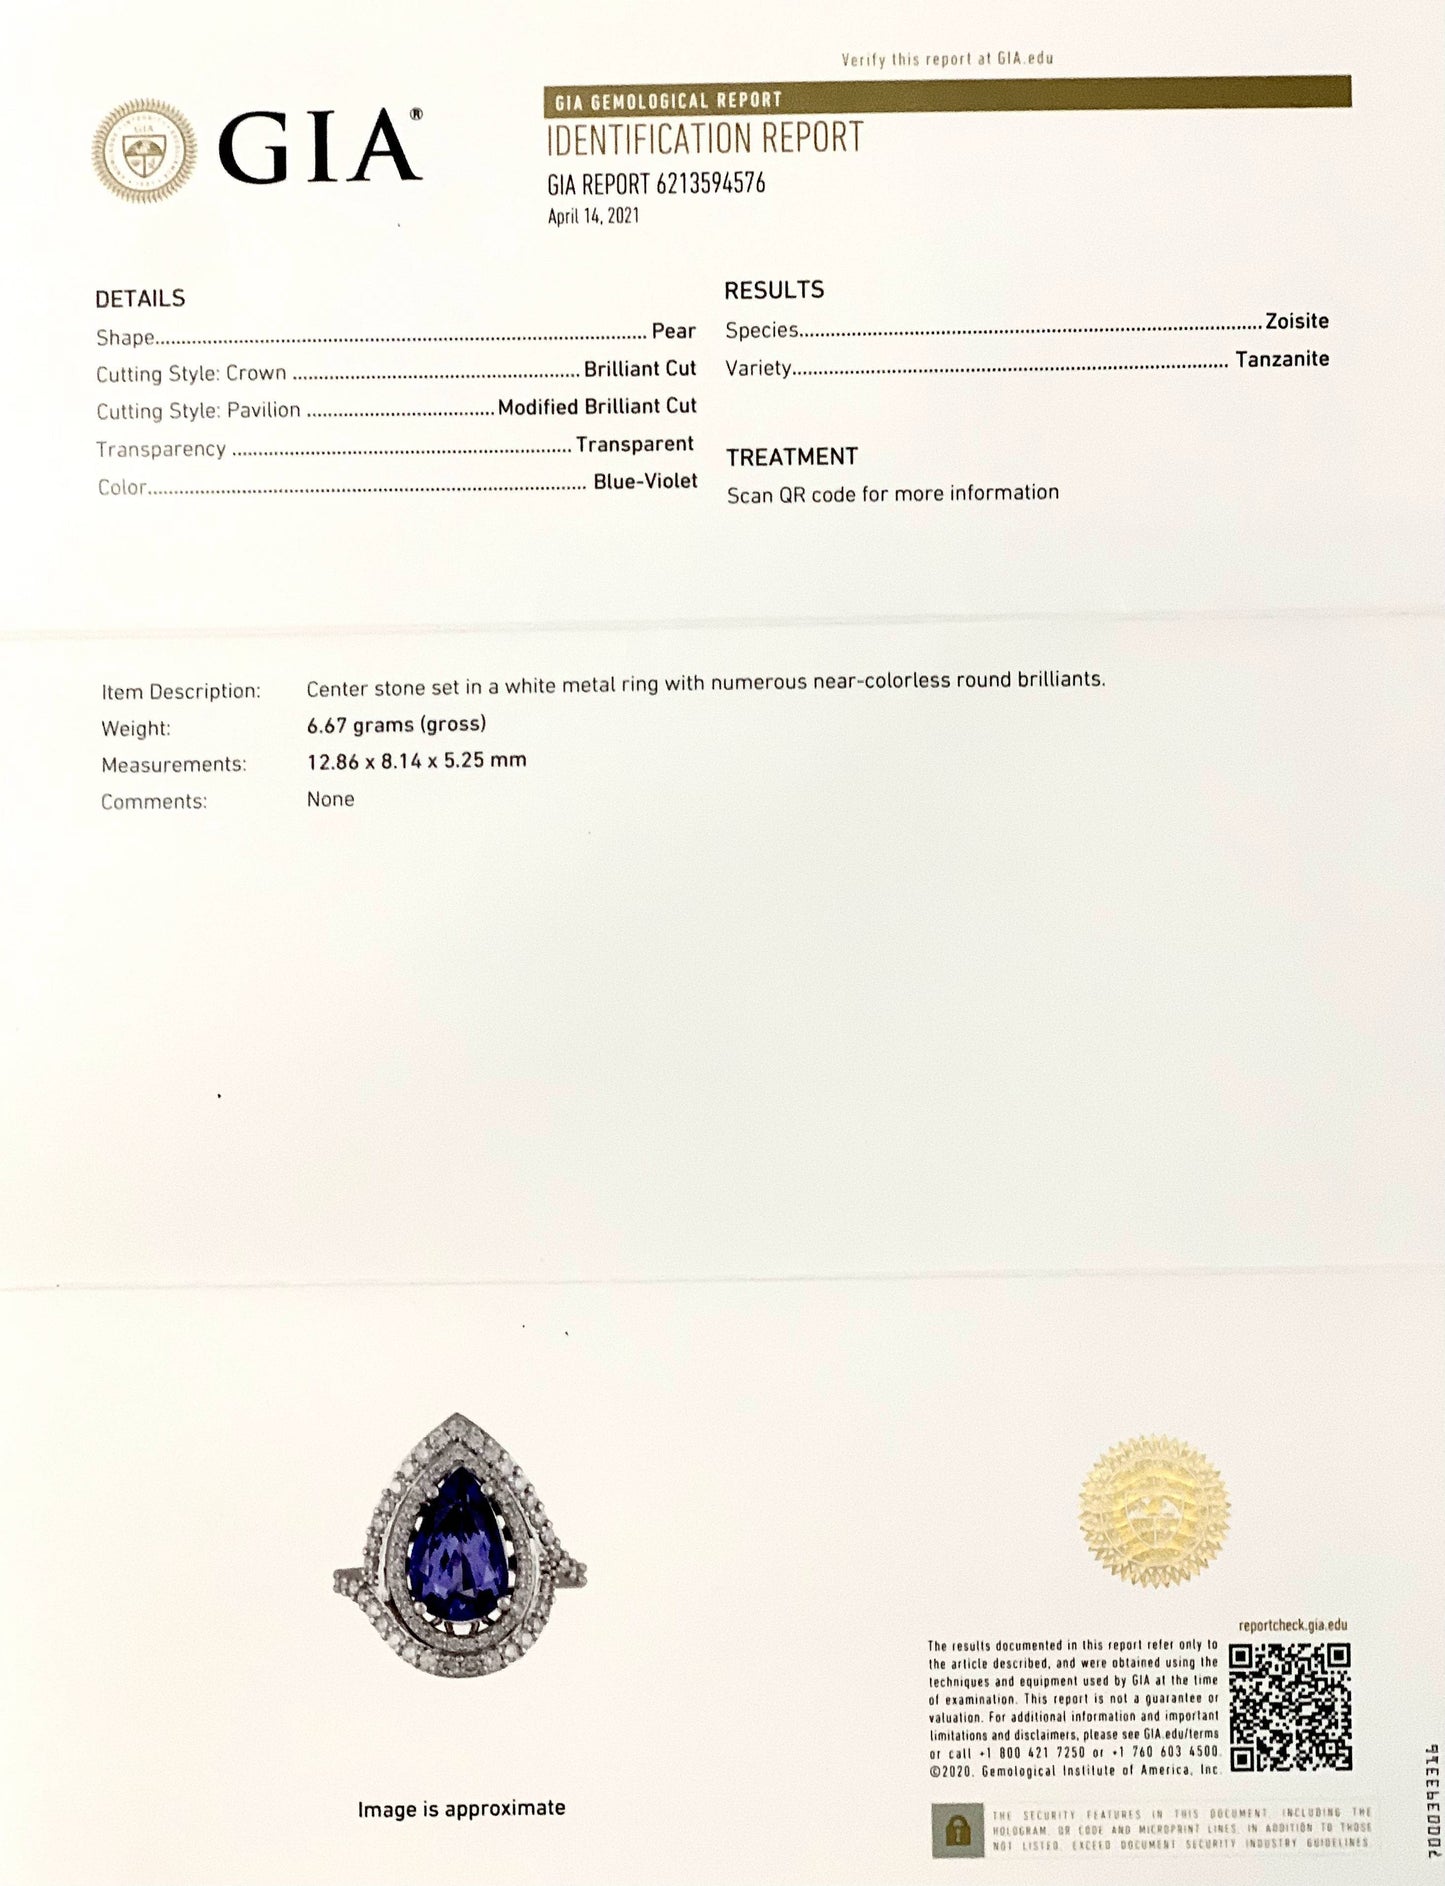 Natural Tanzanite Diamond Ring 14k Gold 4.54 TCW GIA Certified $5,950 111877 - Certified Estate Jewelry